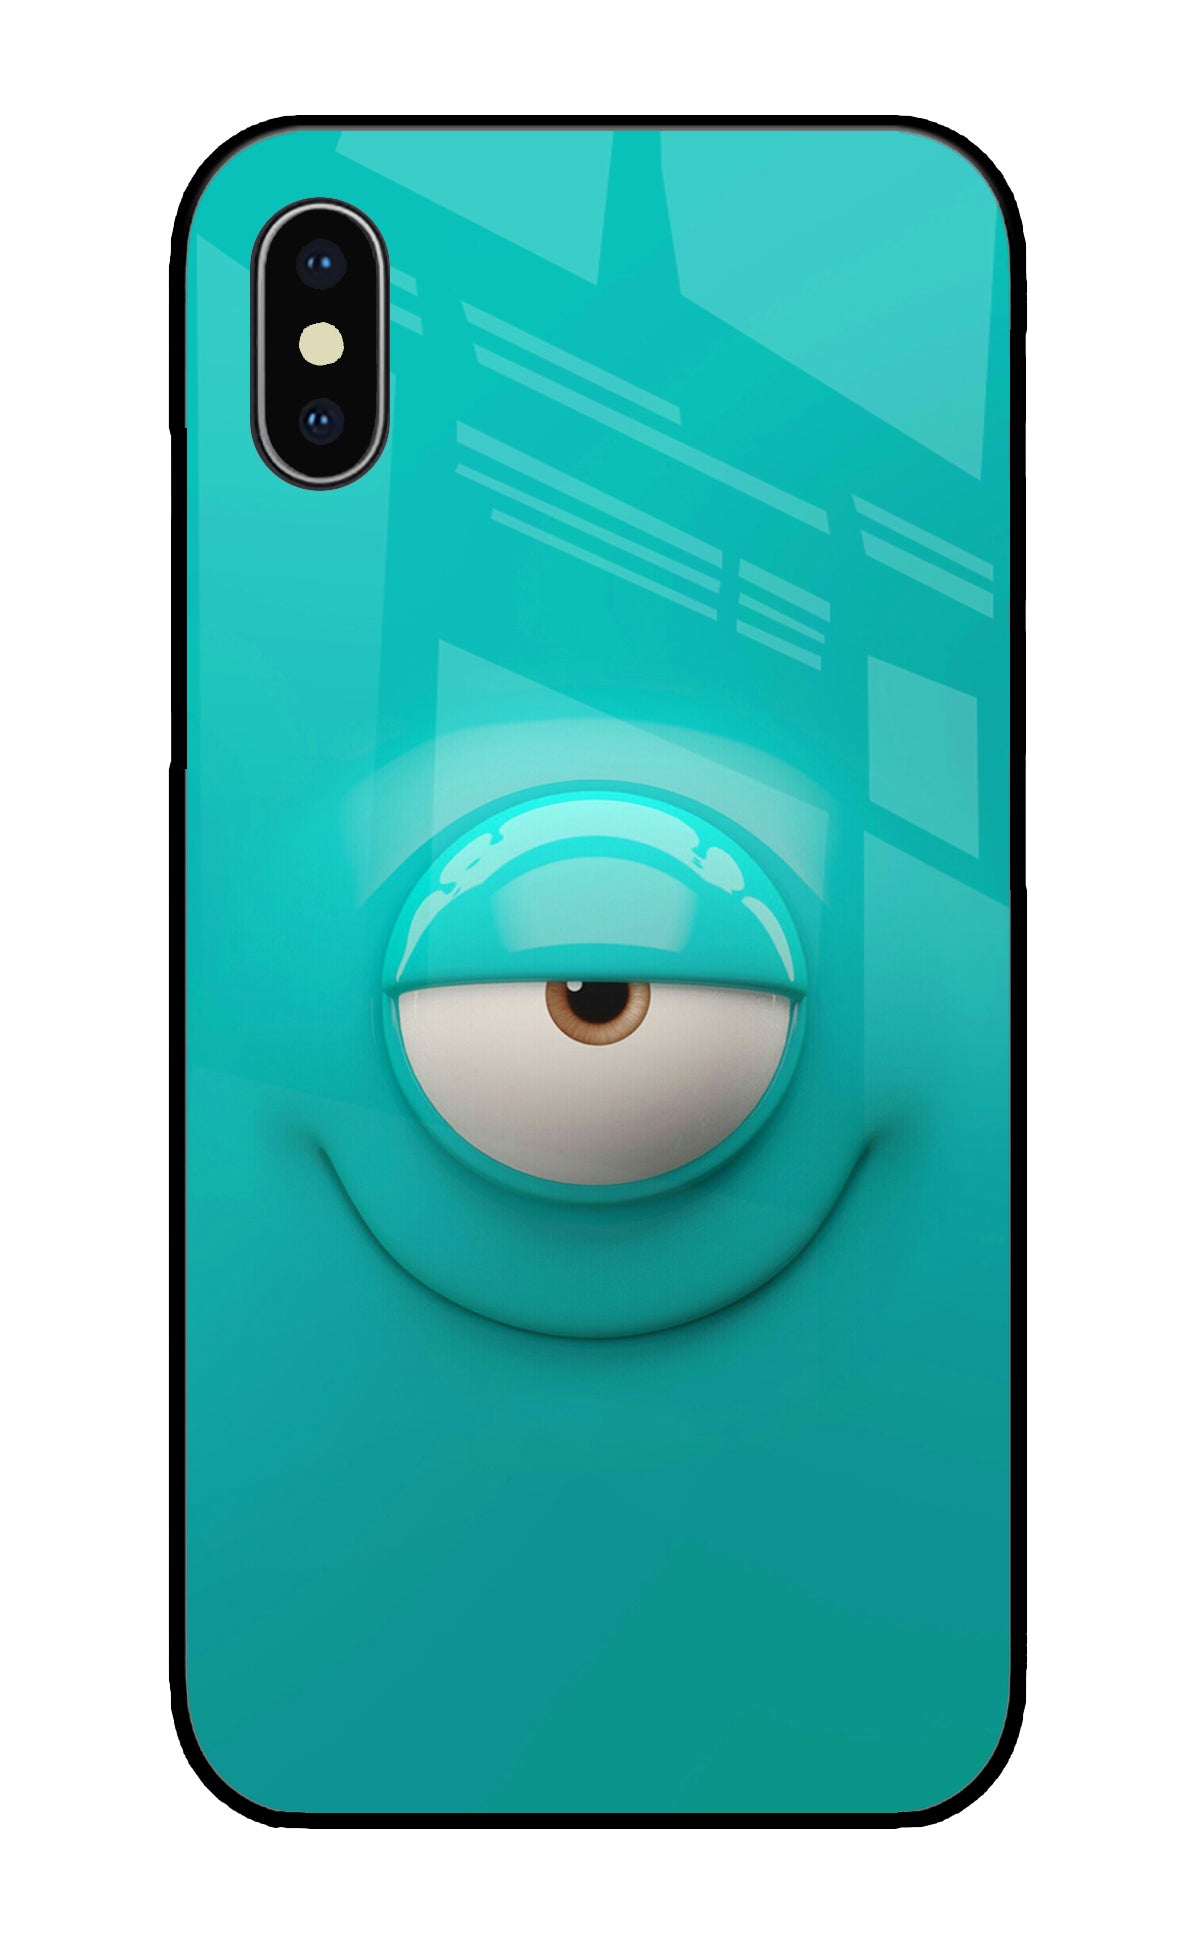 One Eye Cartoon iPhone X Glass Cover